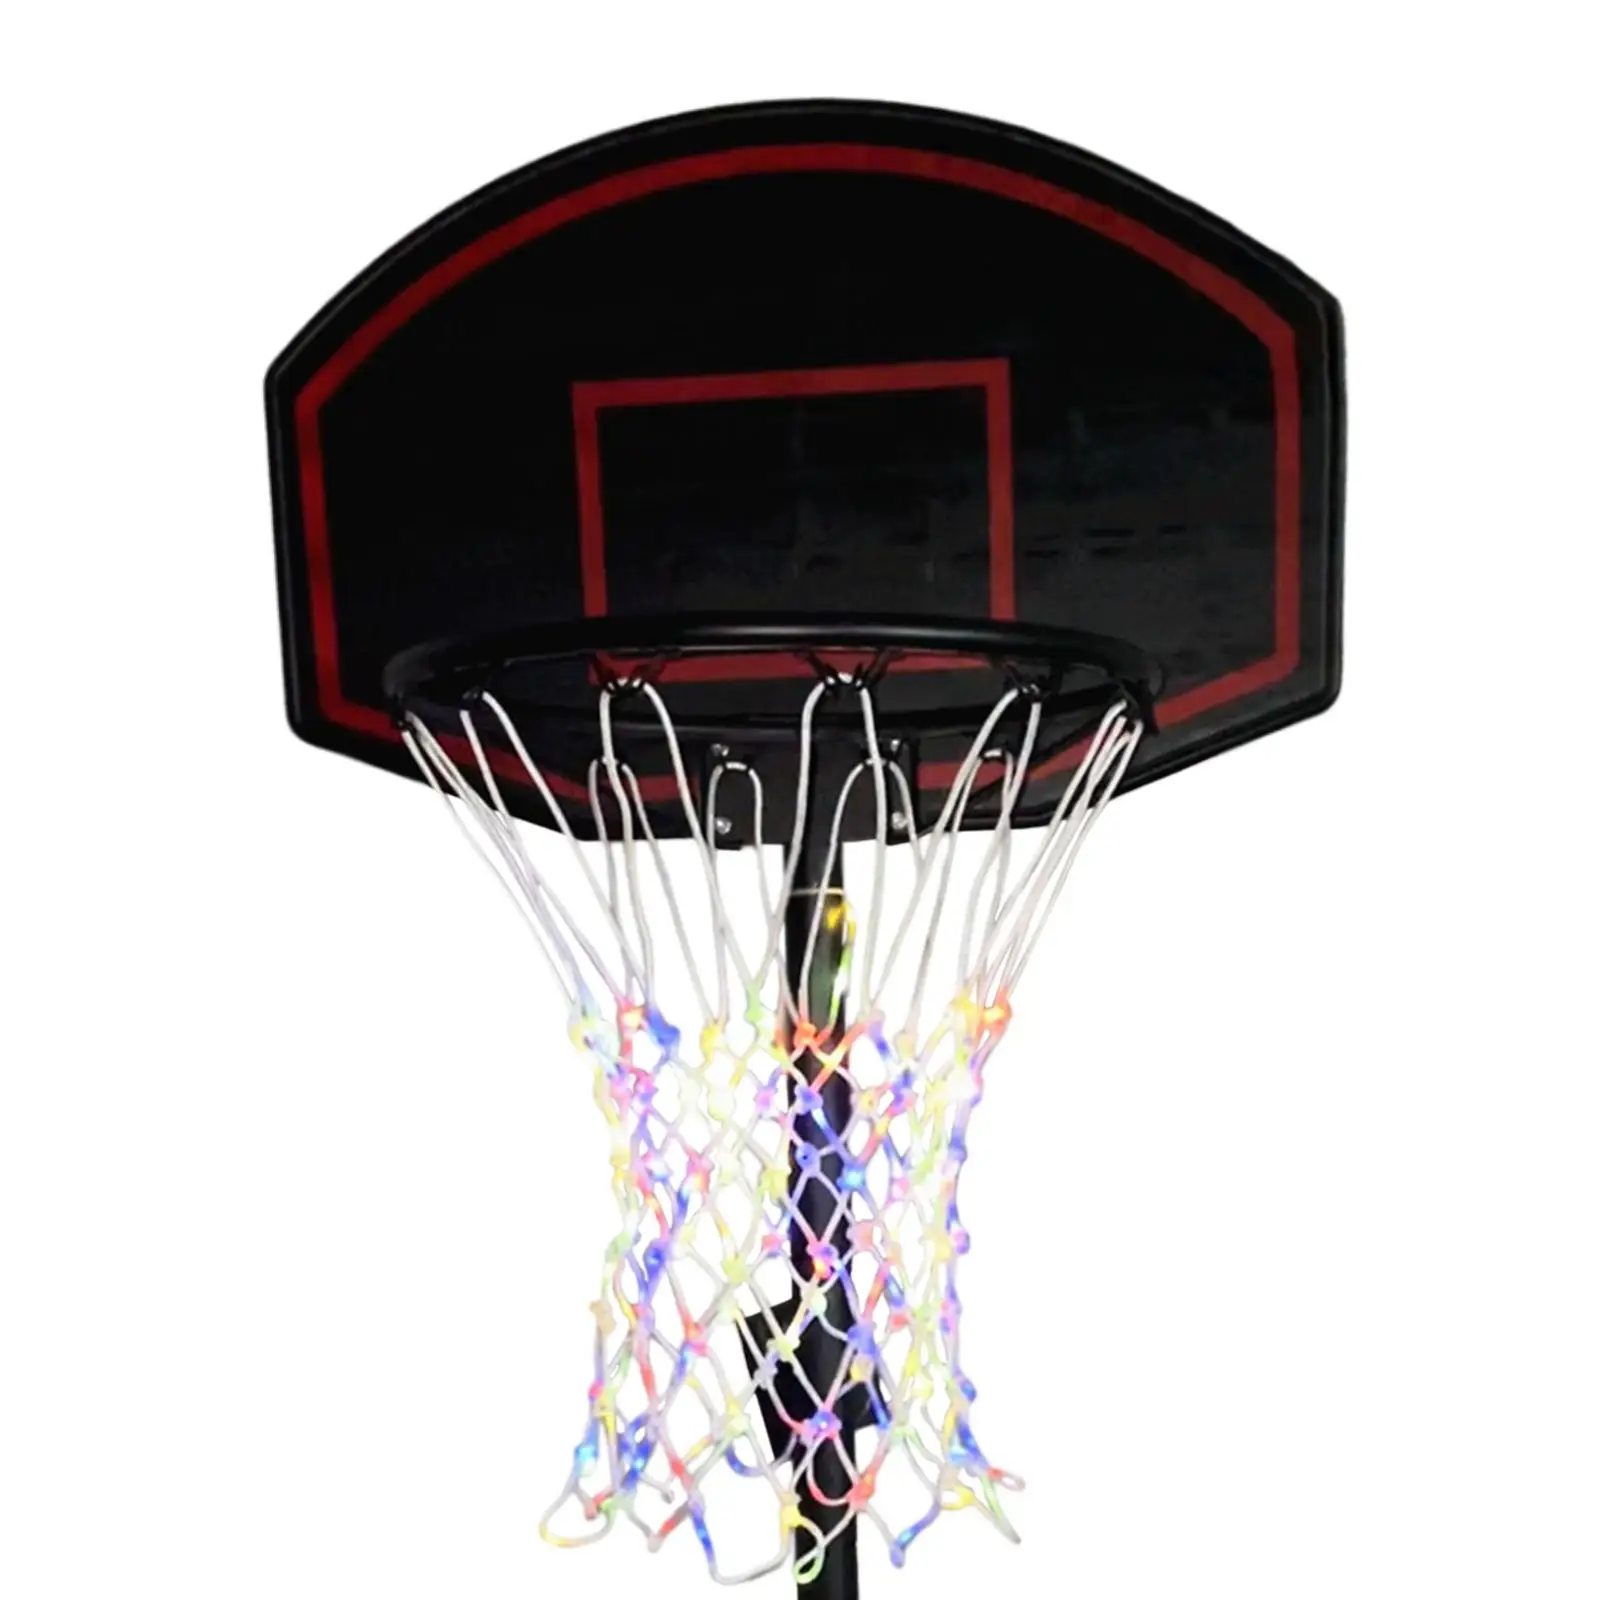 Luminous Outdoor Nylon Hoop Net for Outdoor Game Outside Basketball Training